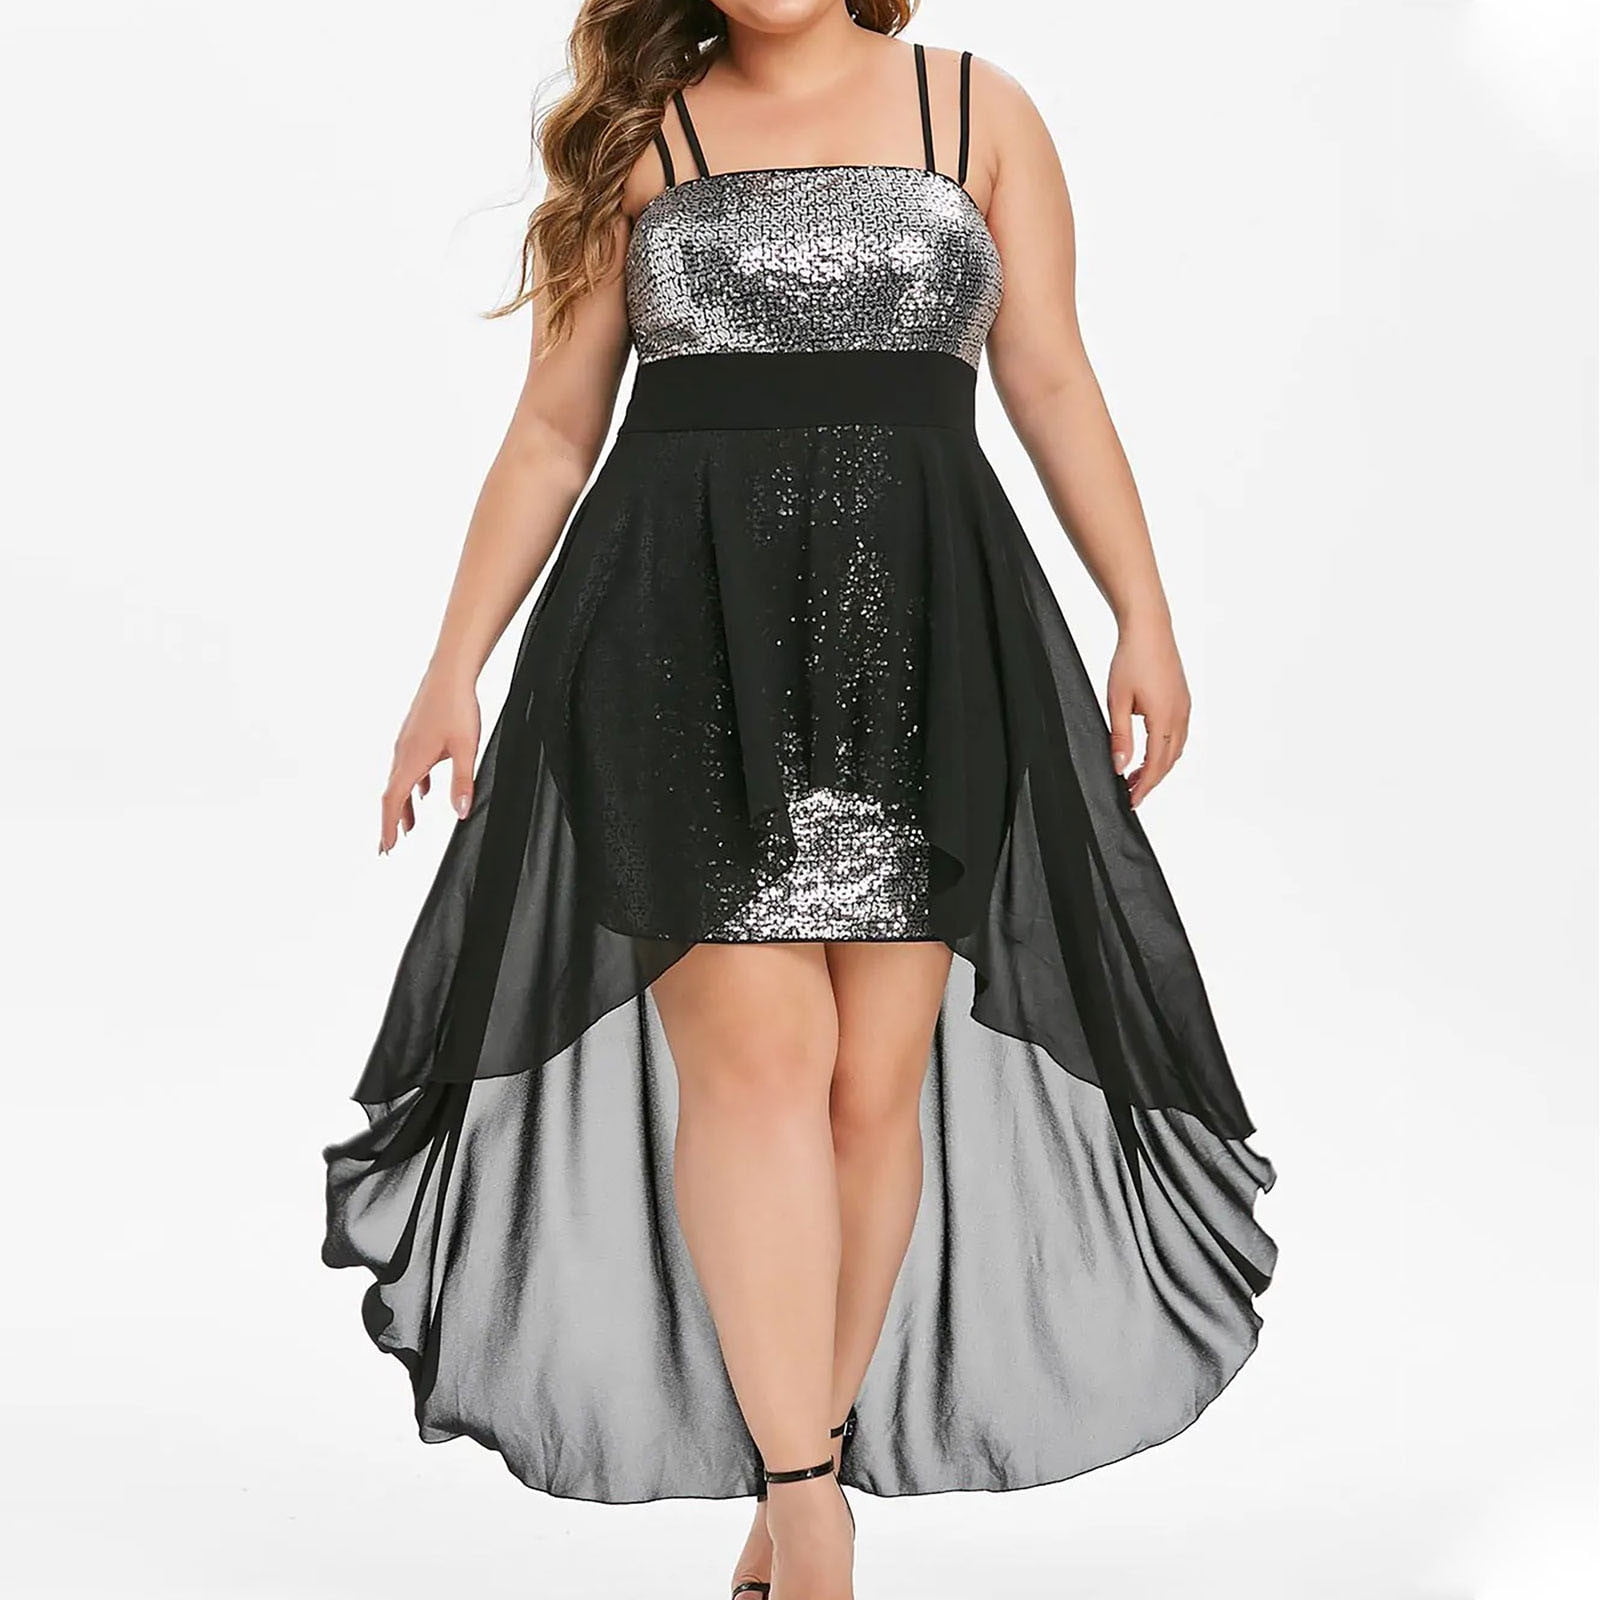 Mrat Women Plus Size Cami Dress Summer Sequin Glitter Party Cocktail ...